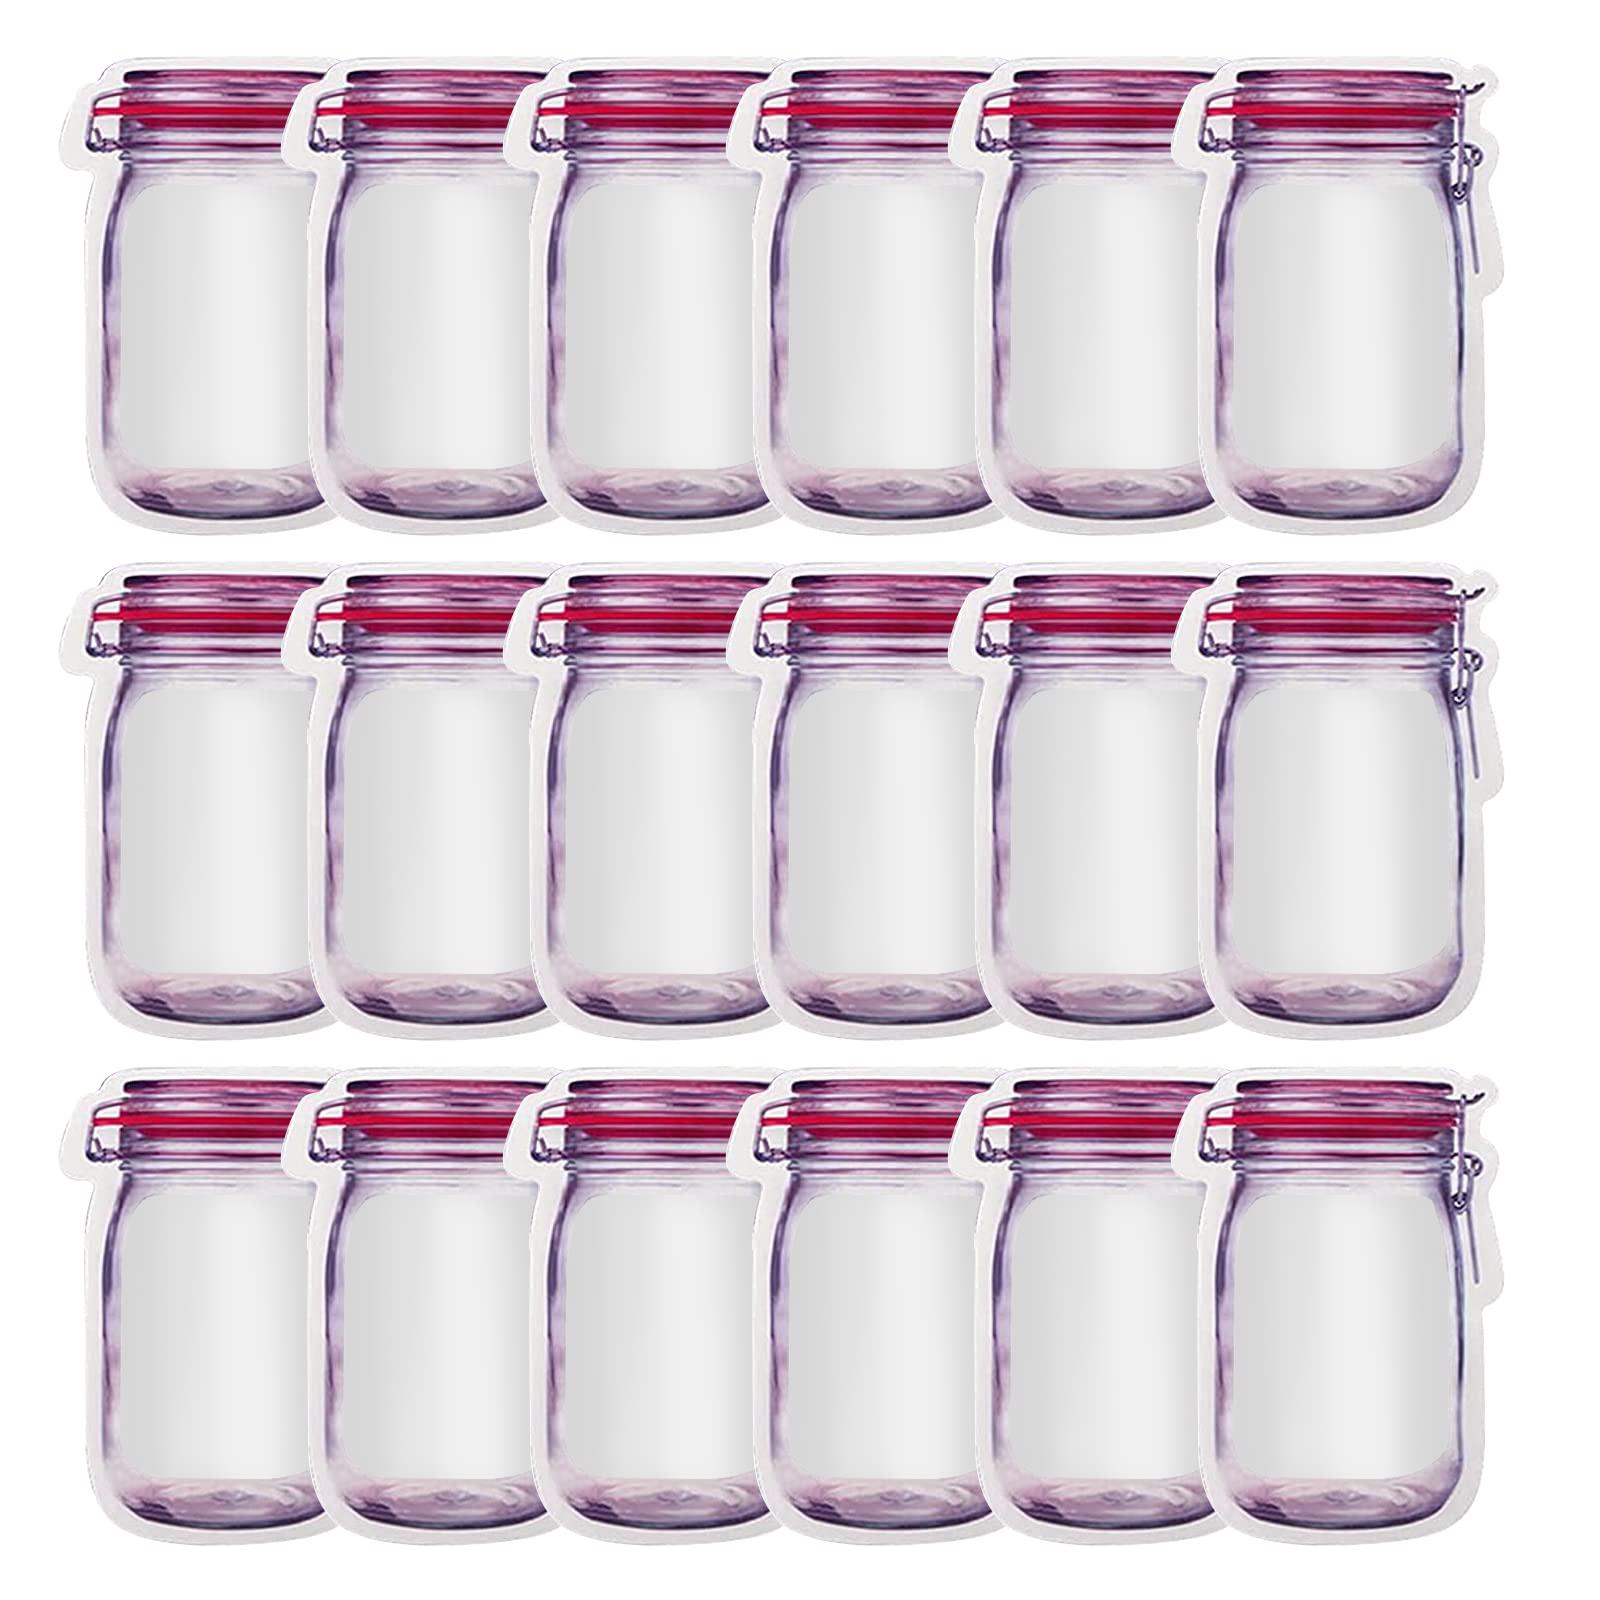 enkrio 18pcs mason jar zipper bags resuable snack bags portable food storage snack zipper bags for kitchen travel camping pic